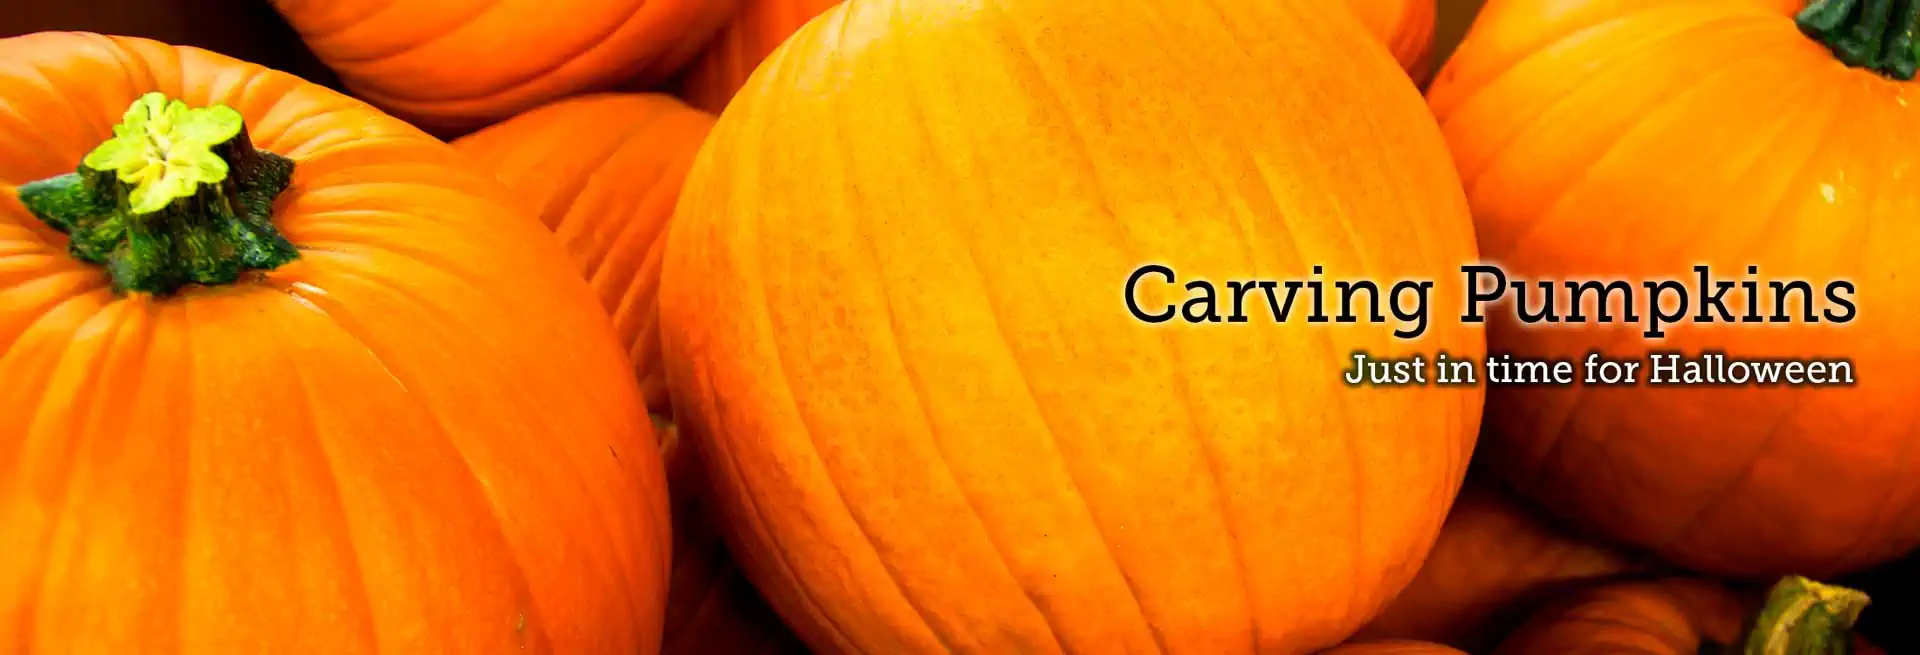 Halloween carving pumpkins